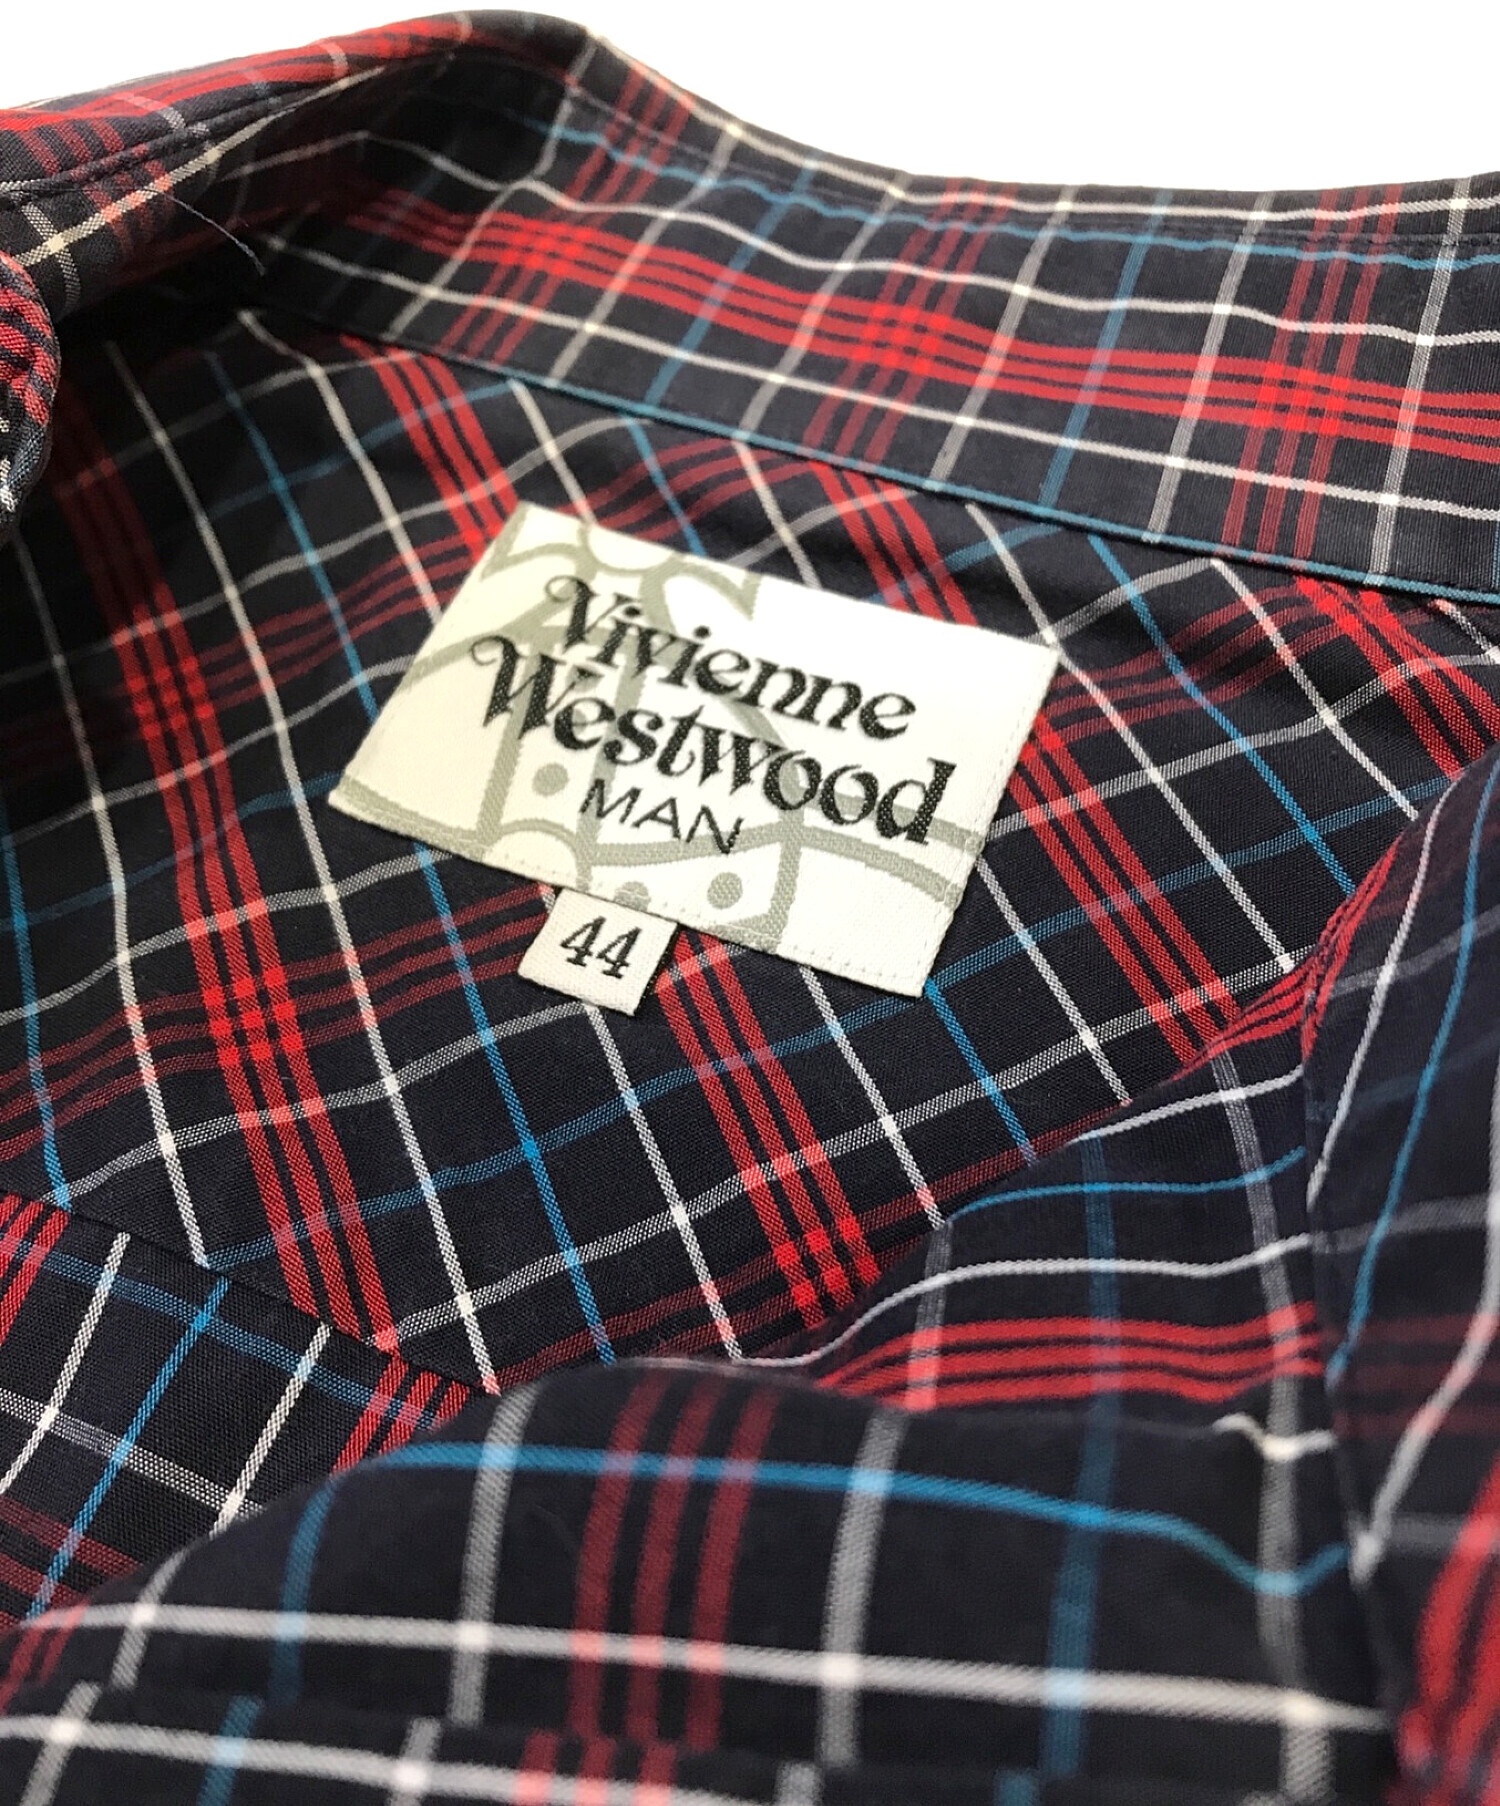 Vivienne Westwood man (ヴィヴィアン ウェストウッド マン) アシメチェックシャツ レッド×ネイビー サイズ:44